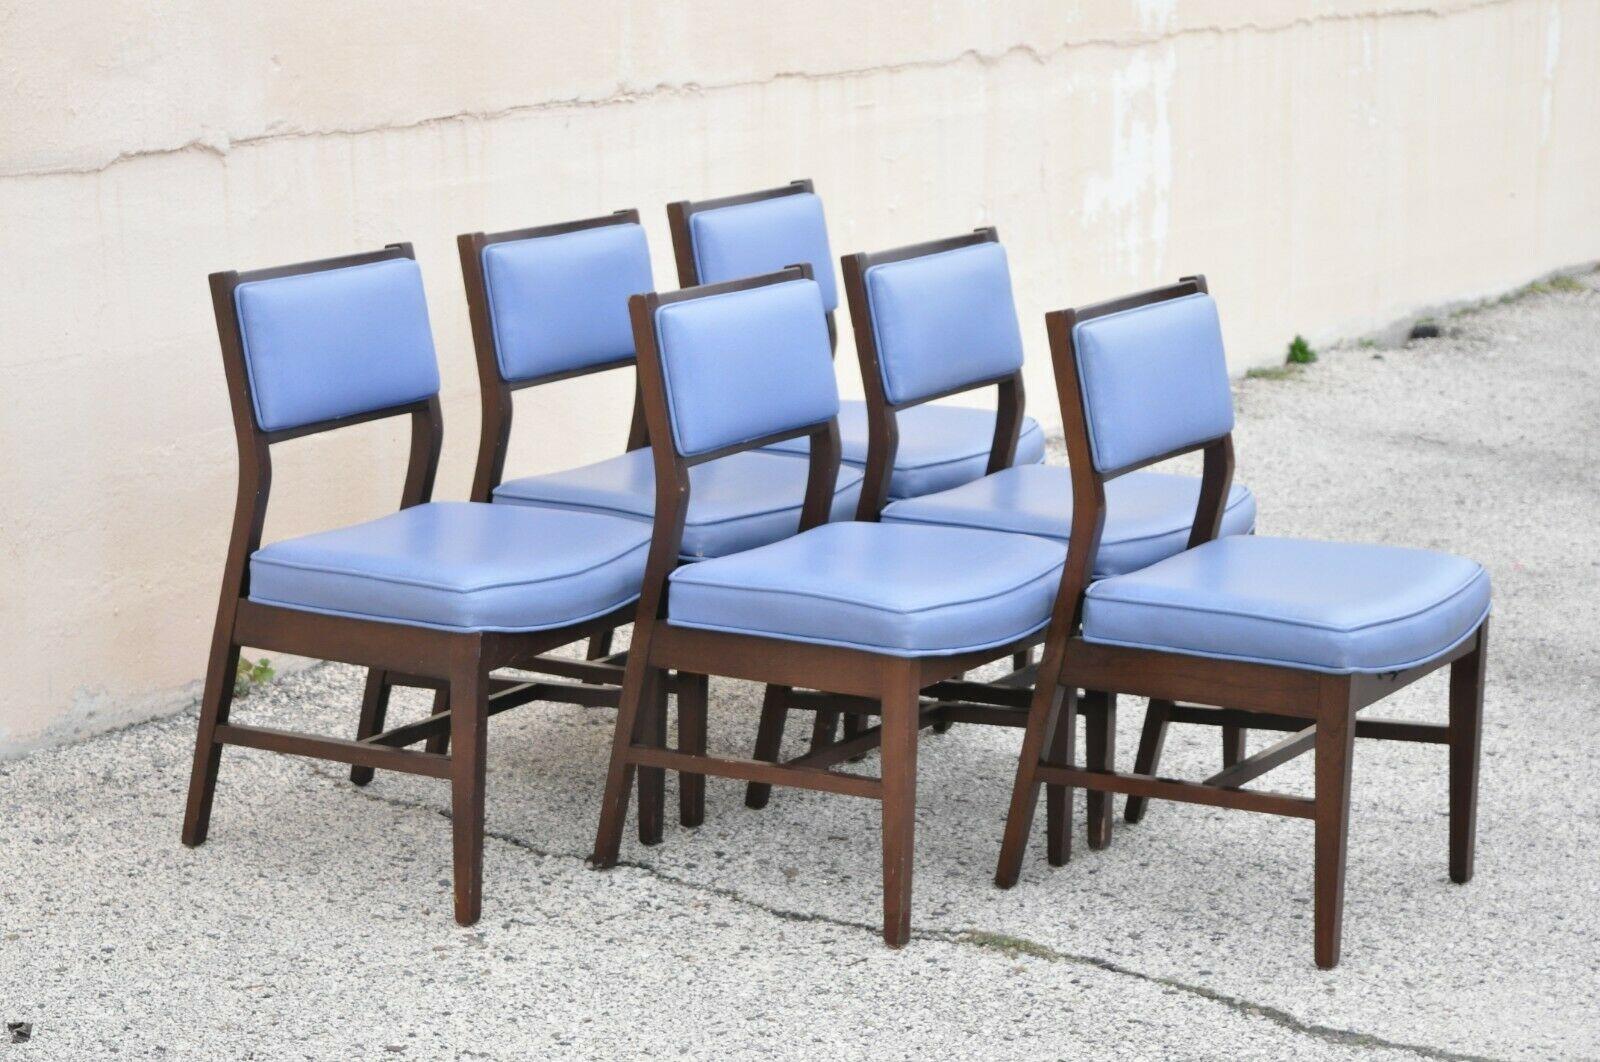 Vintage Mid Century Modern Jens Risom Style Blue Sculpted Dining Chairs - Set of 6. Item features solid wood frames, original blue naugahyde upholstery, sleek sculptural form, clean Modernist lines, quality American craftsmanship. Maker unconfirmed